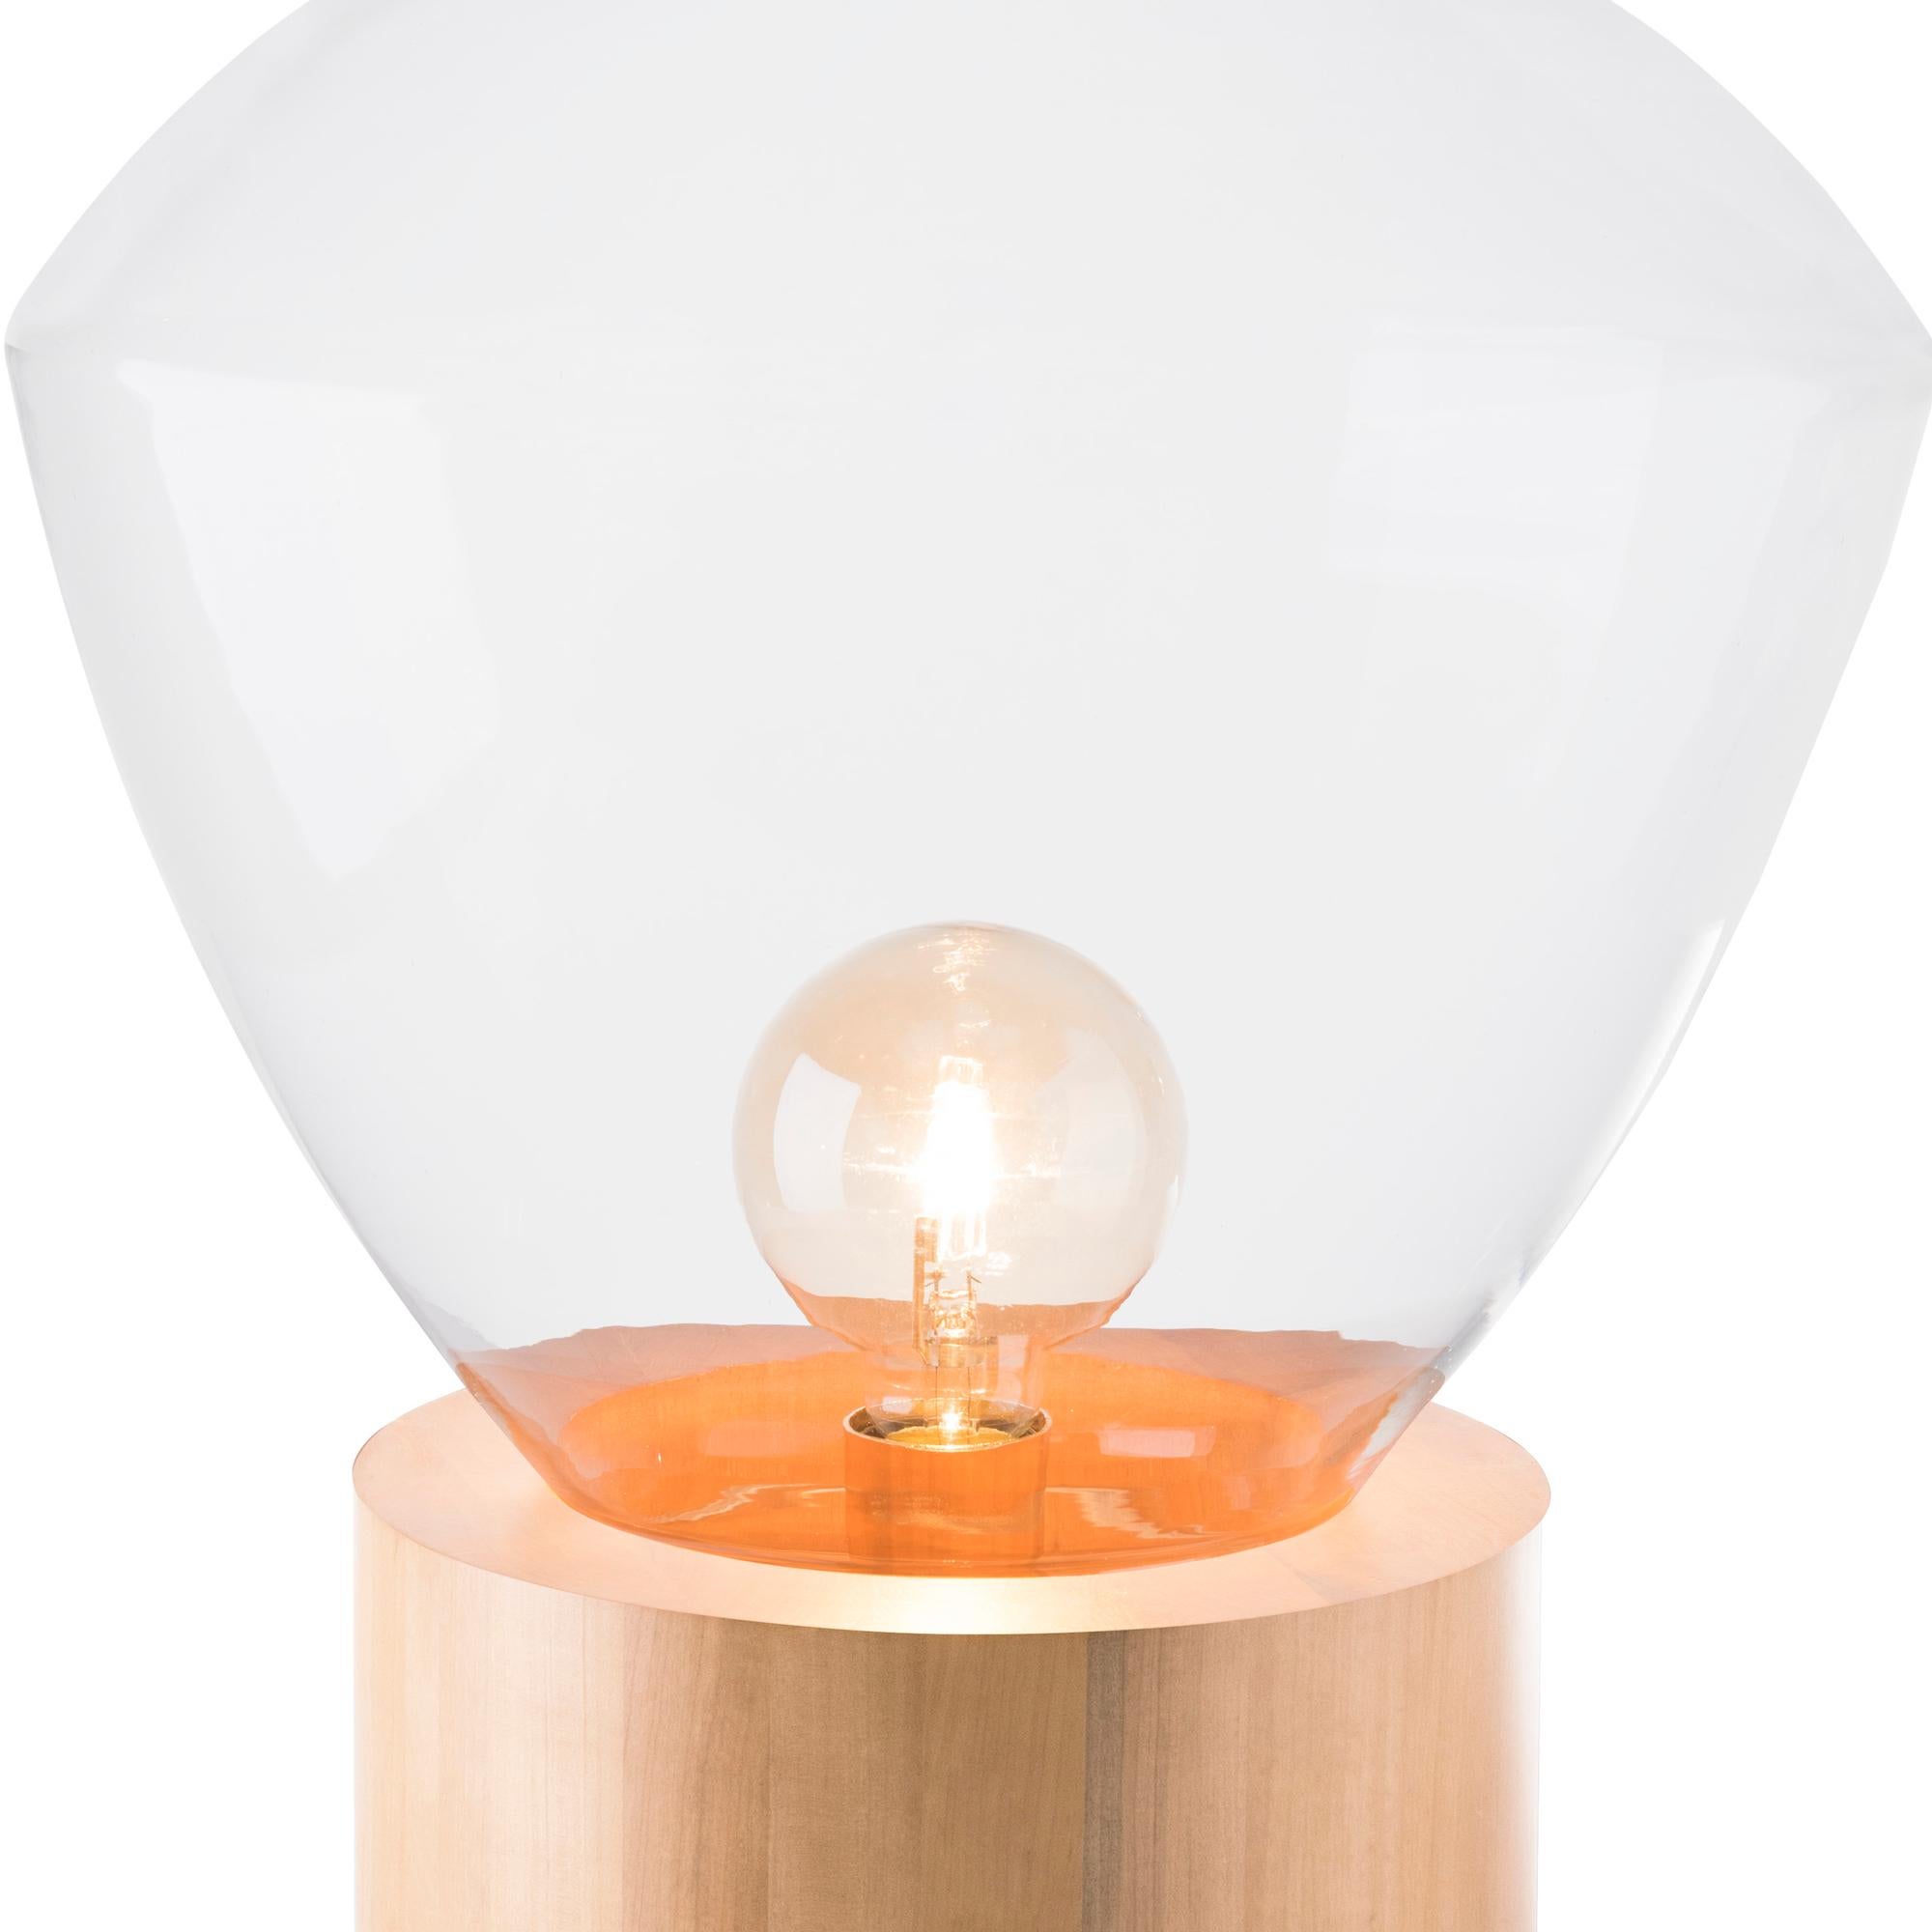 Hand-Crafted Table Lamp Lampadari #6, Brazilian Wood, Metal and Glass For Sale